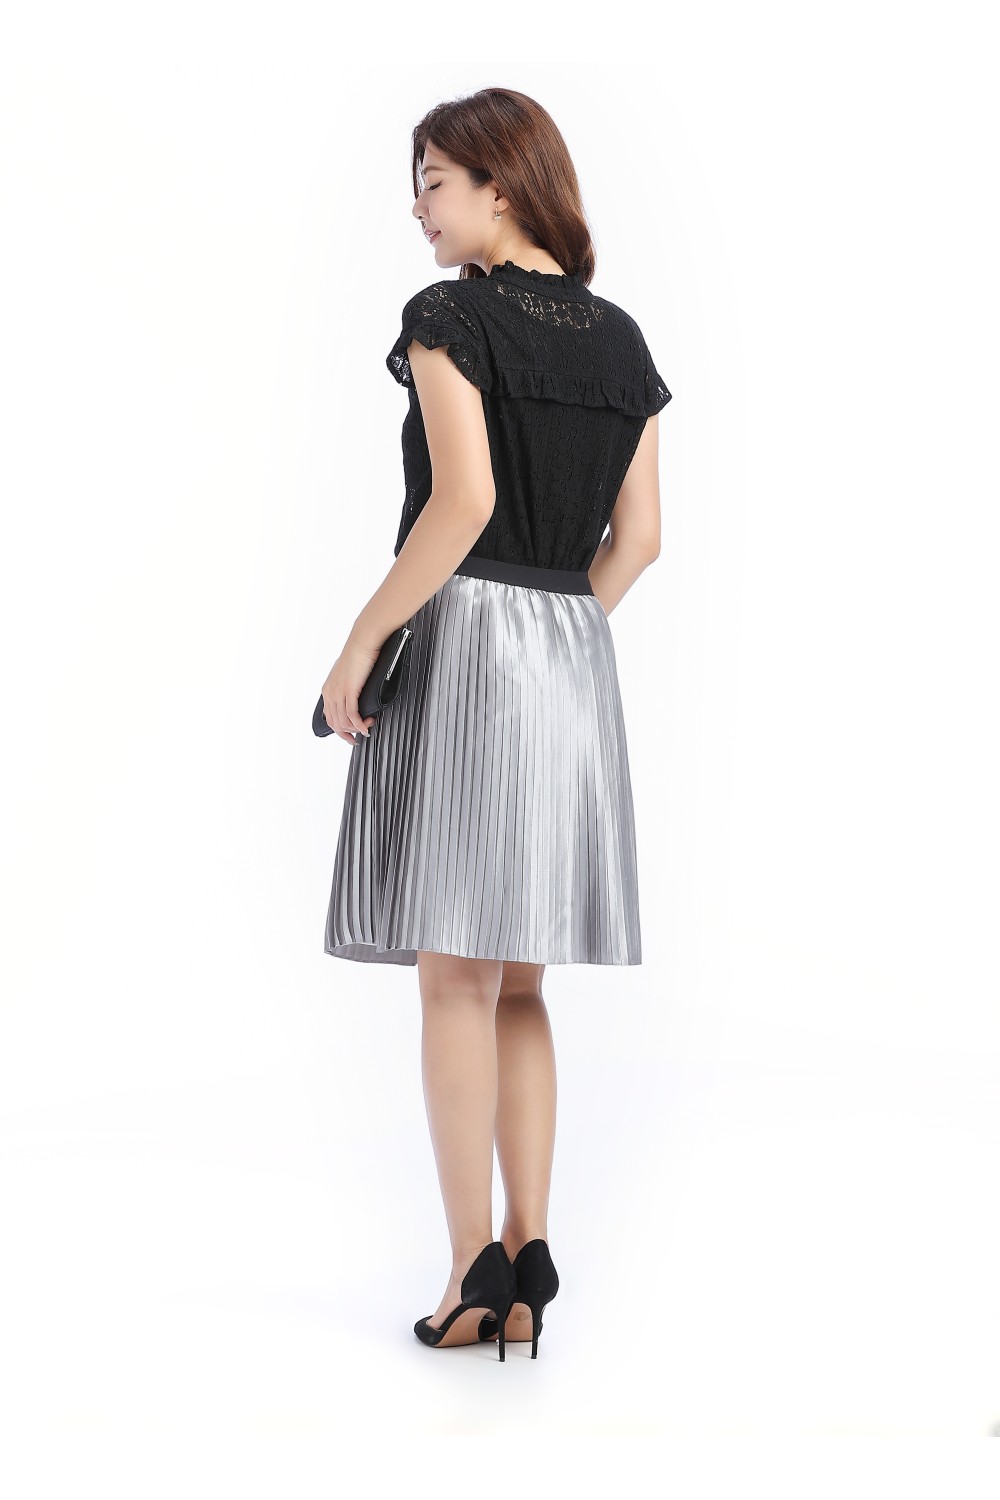 Shinny Pleated Skirt